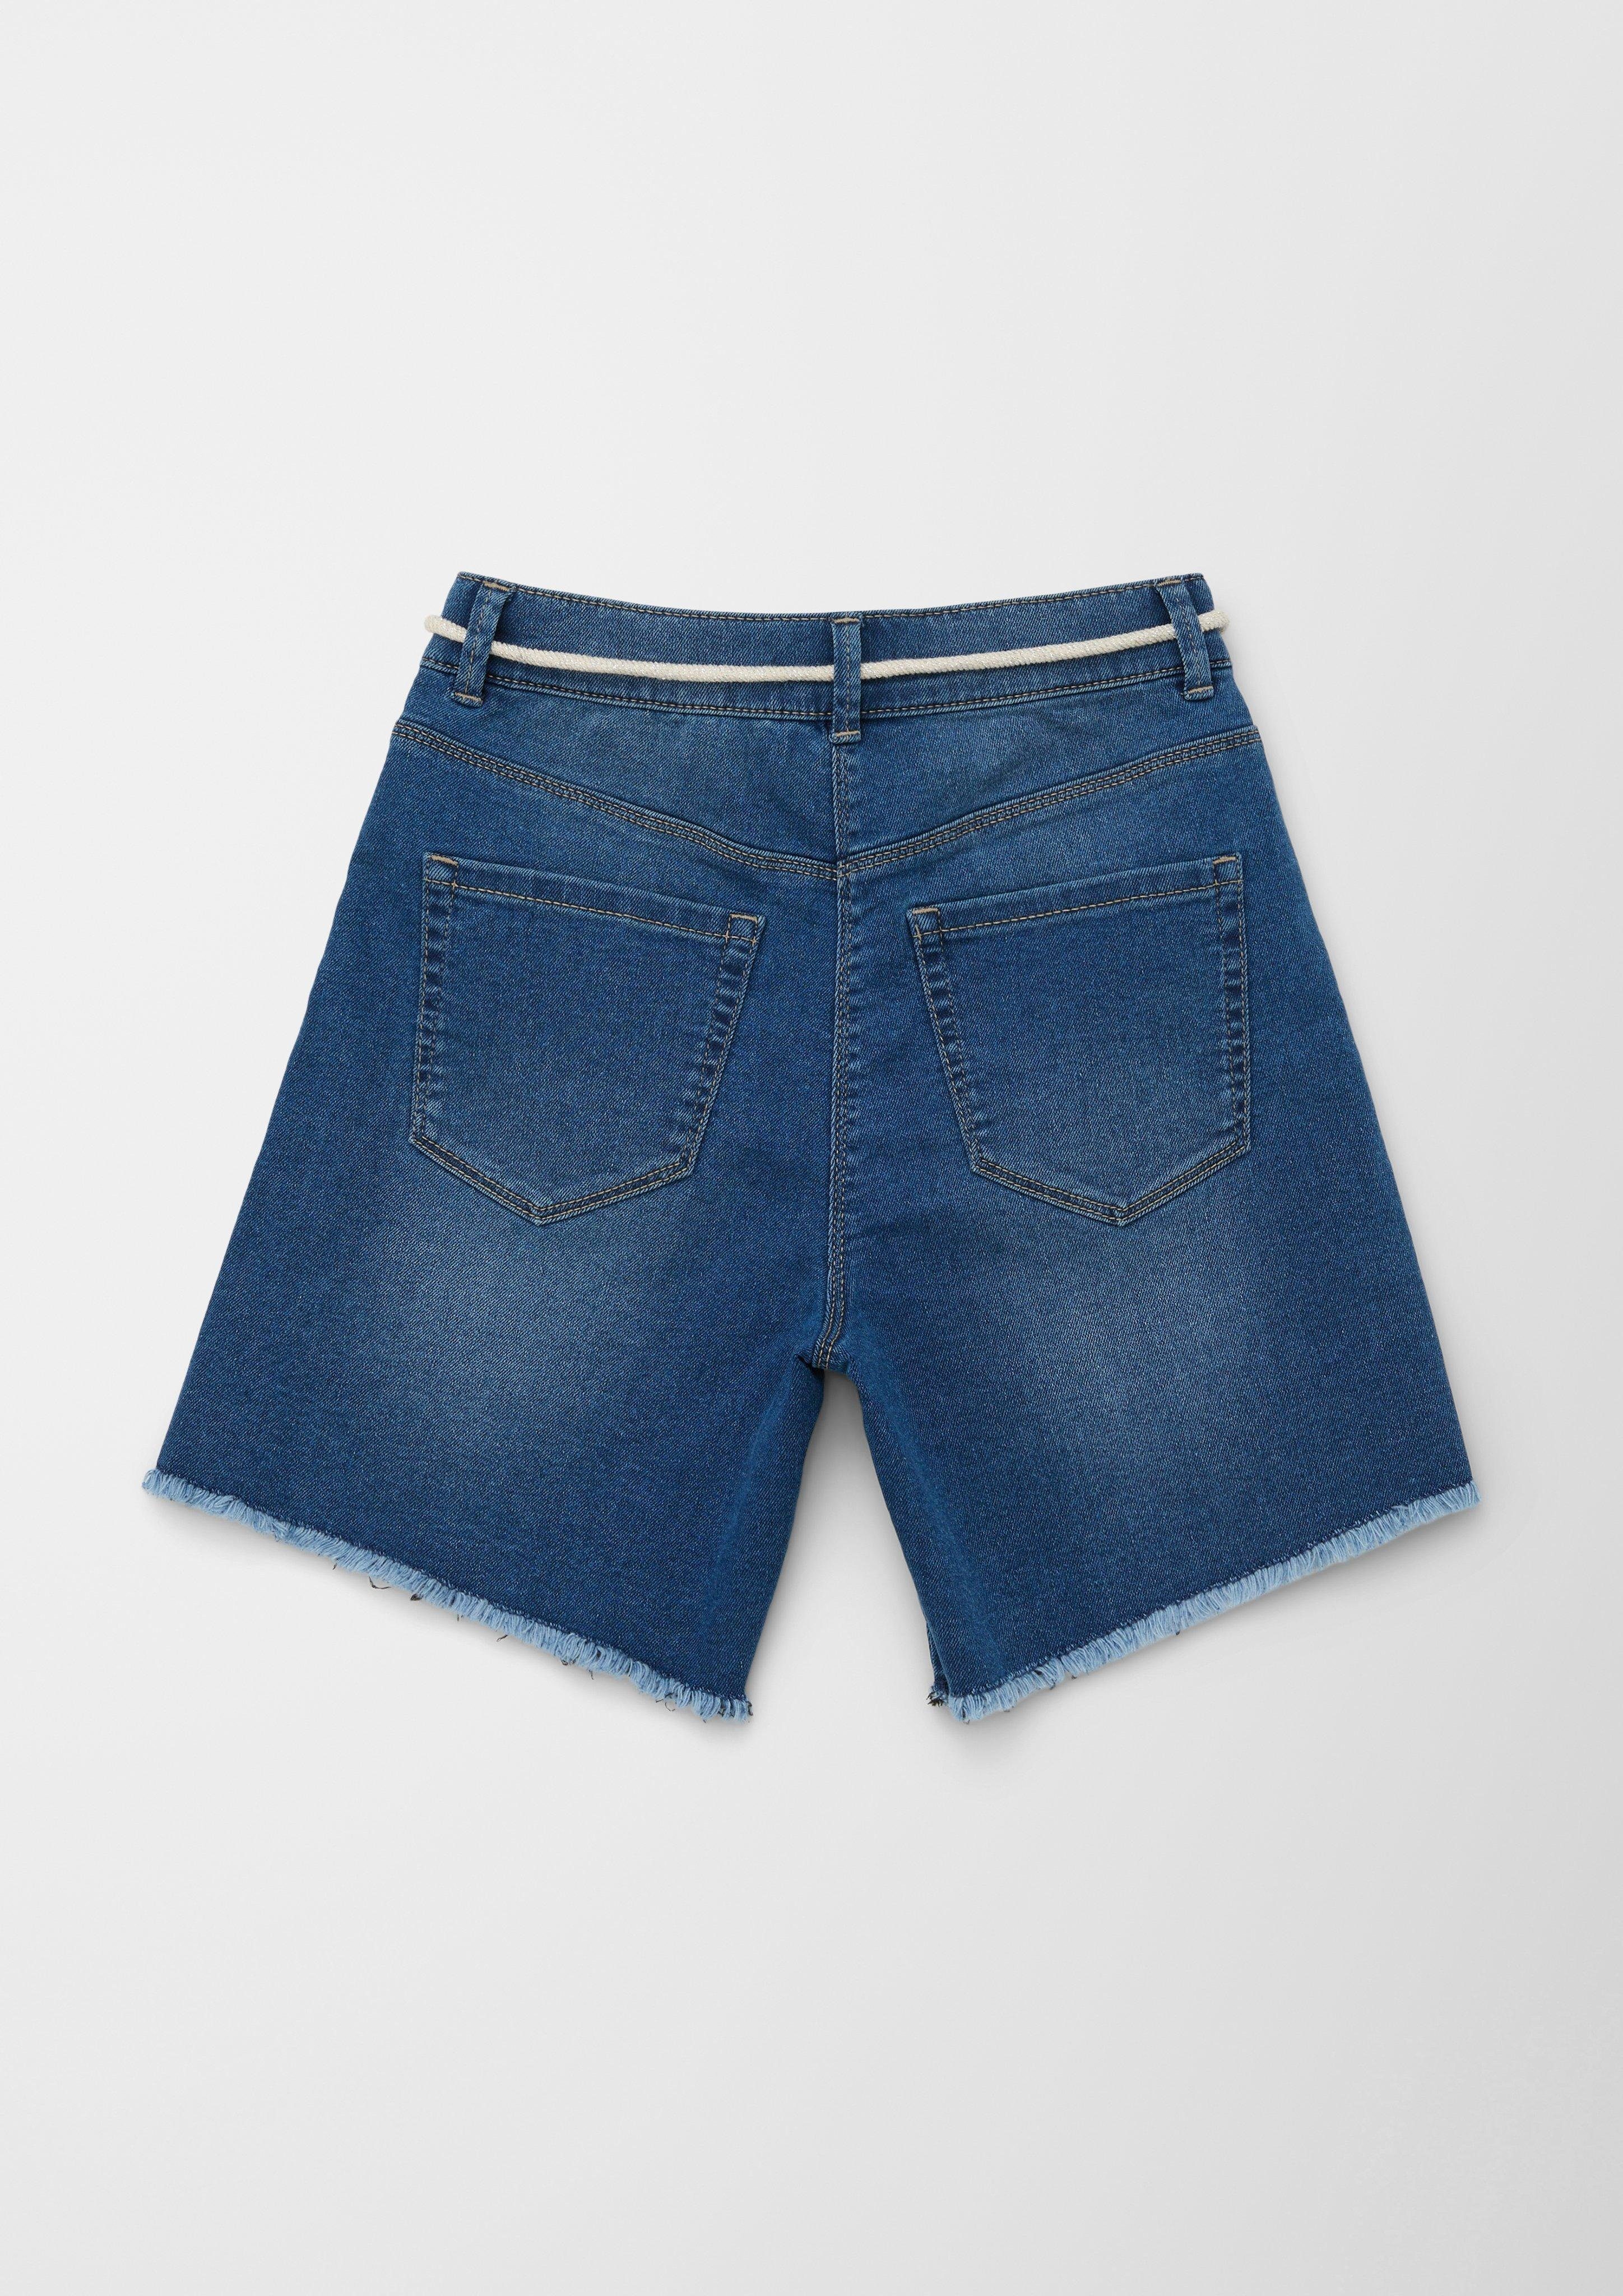 s.Oliver Bermudas Jeans-Bermuda / Loose Fit Wide / High / Rise Waschung Leg